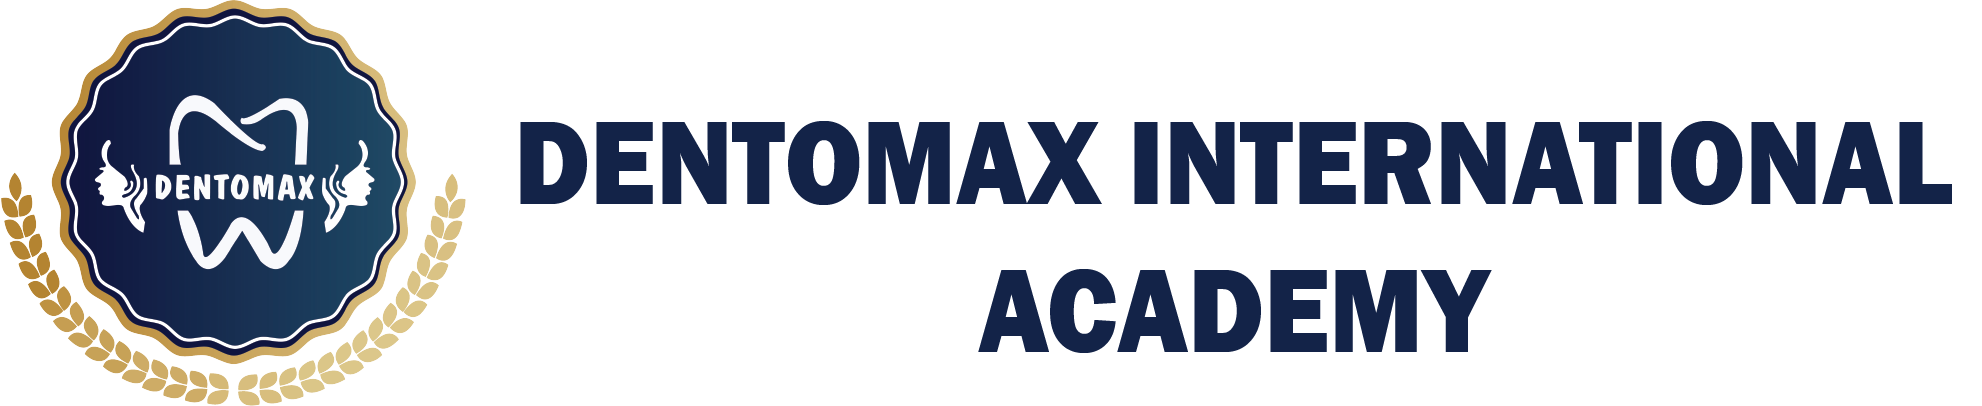 Dentomax International Academy